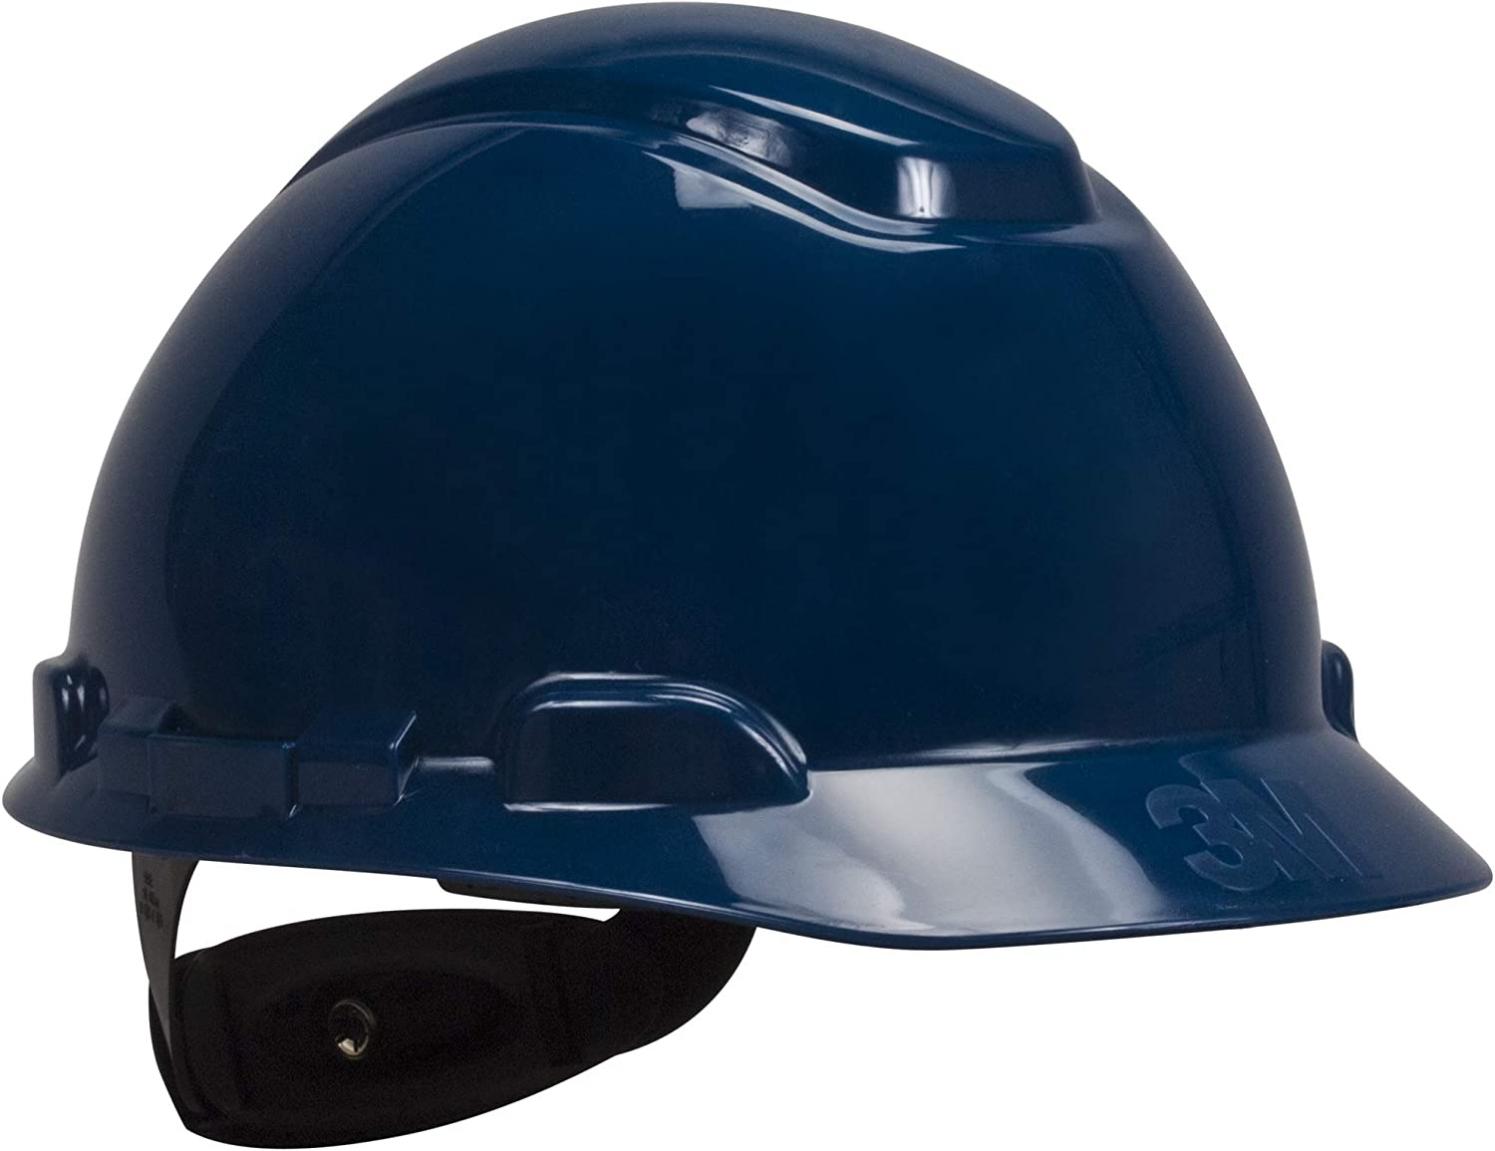 3M Hard Hat, Navy Blue, Lightweight, Adjustable 4-Point Ratchet, H-710R